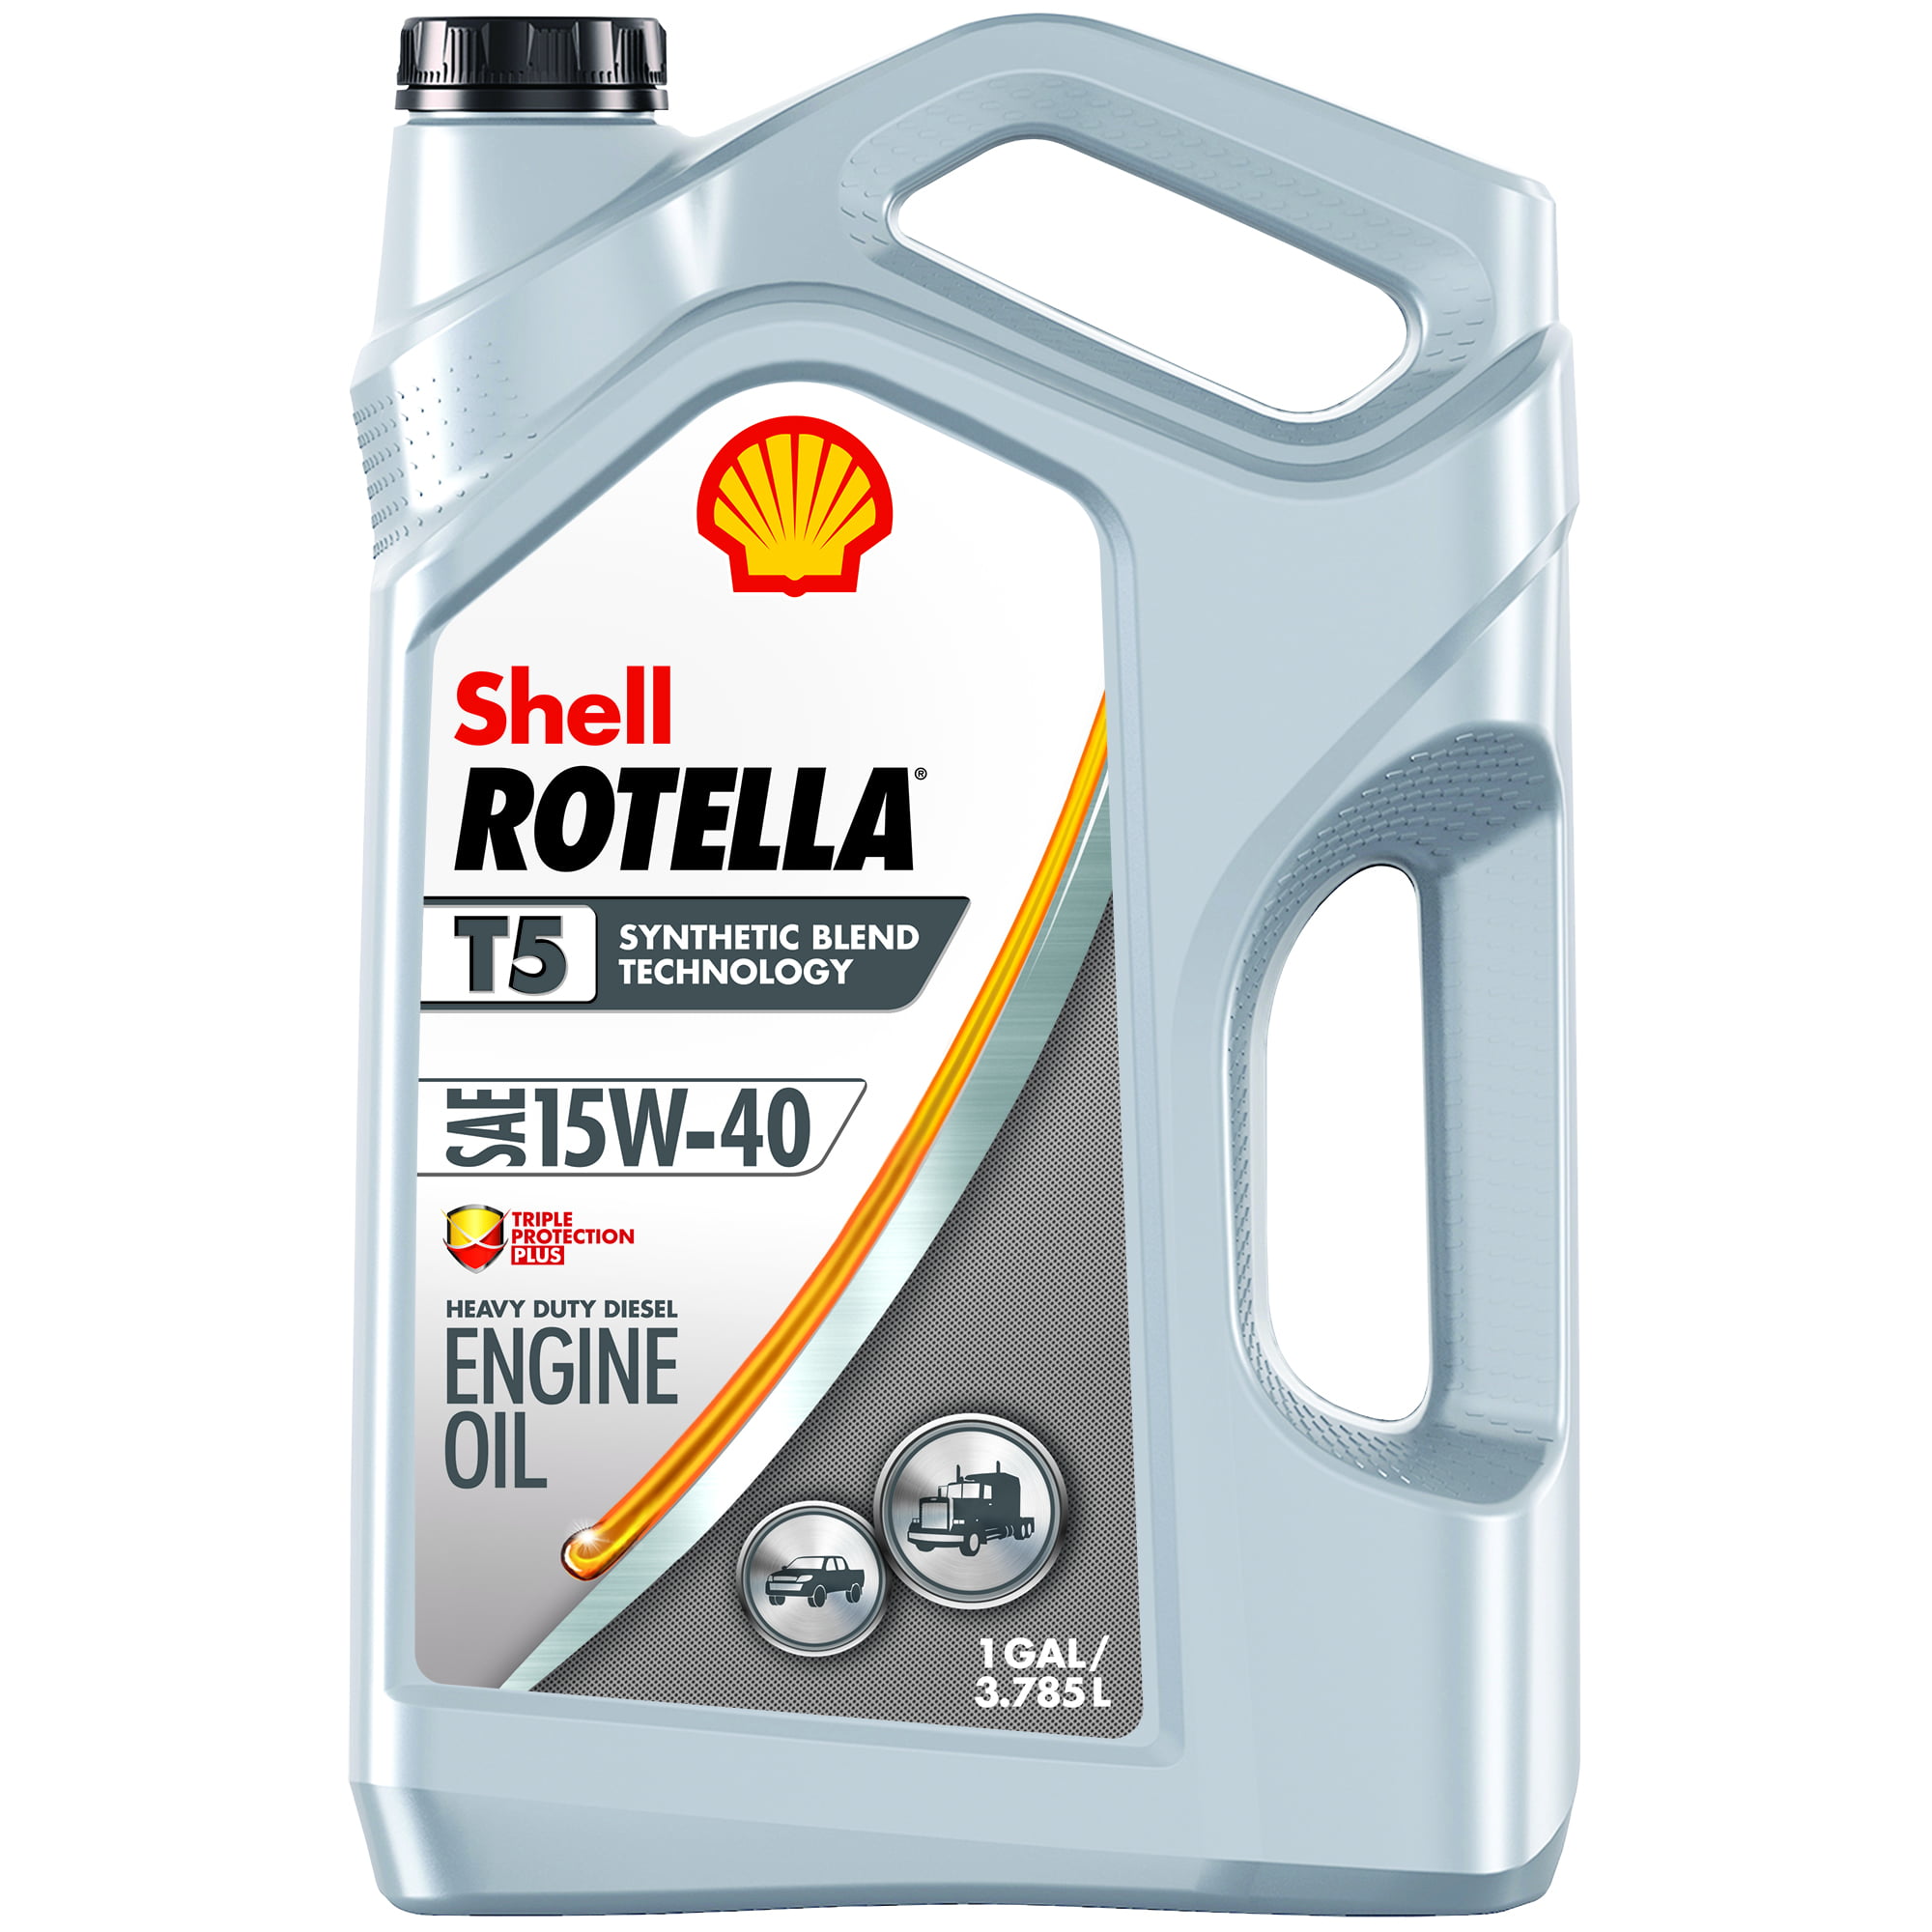 shell-rotella-t5-15w-40-synthetic-blend-heavy-duty-diesel-engine-oil-1